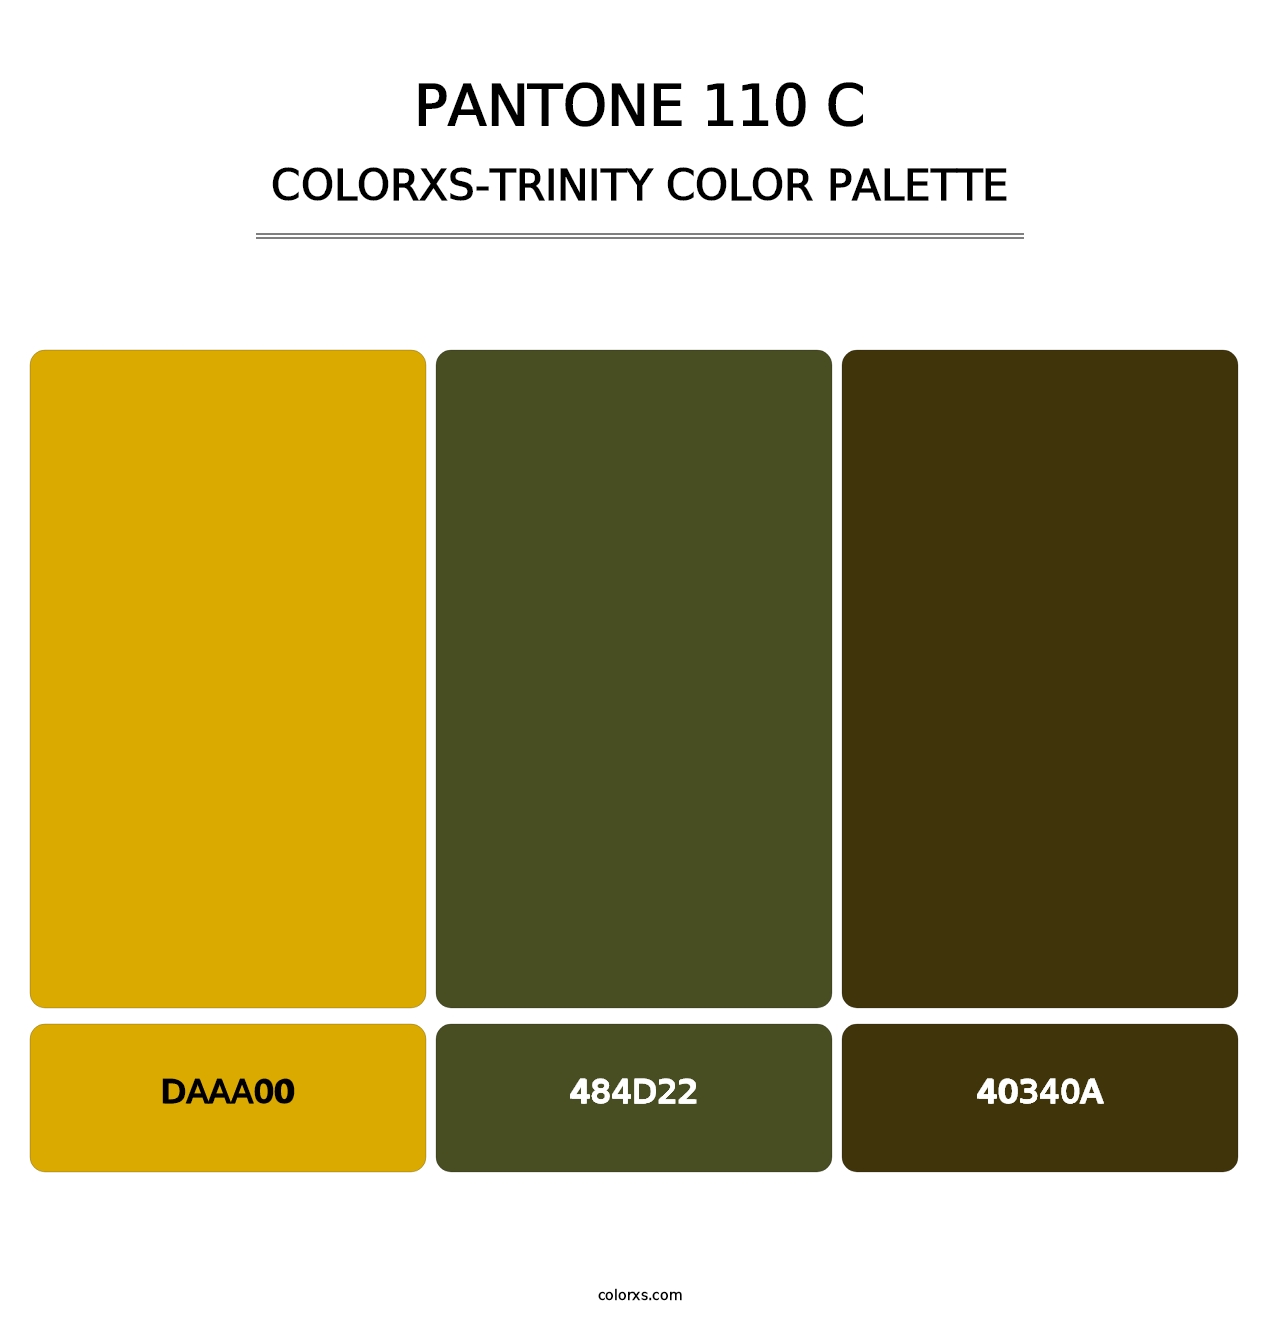 PANTONE 110 C - Colorxs Trinity Palette